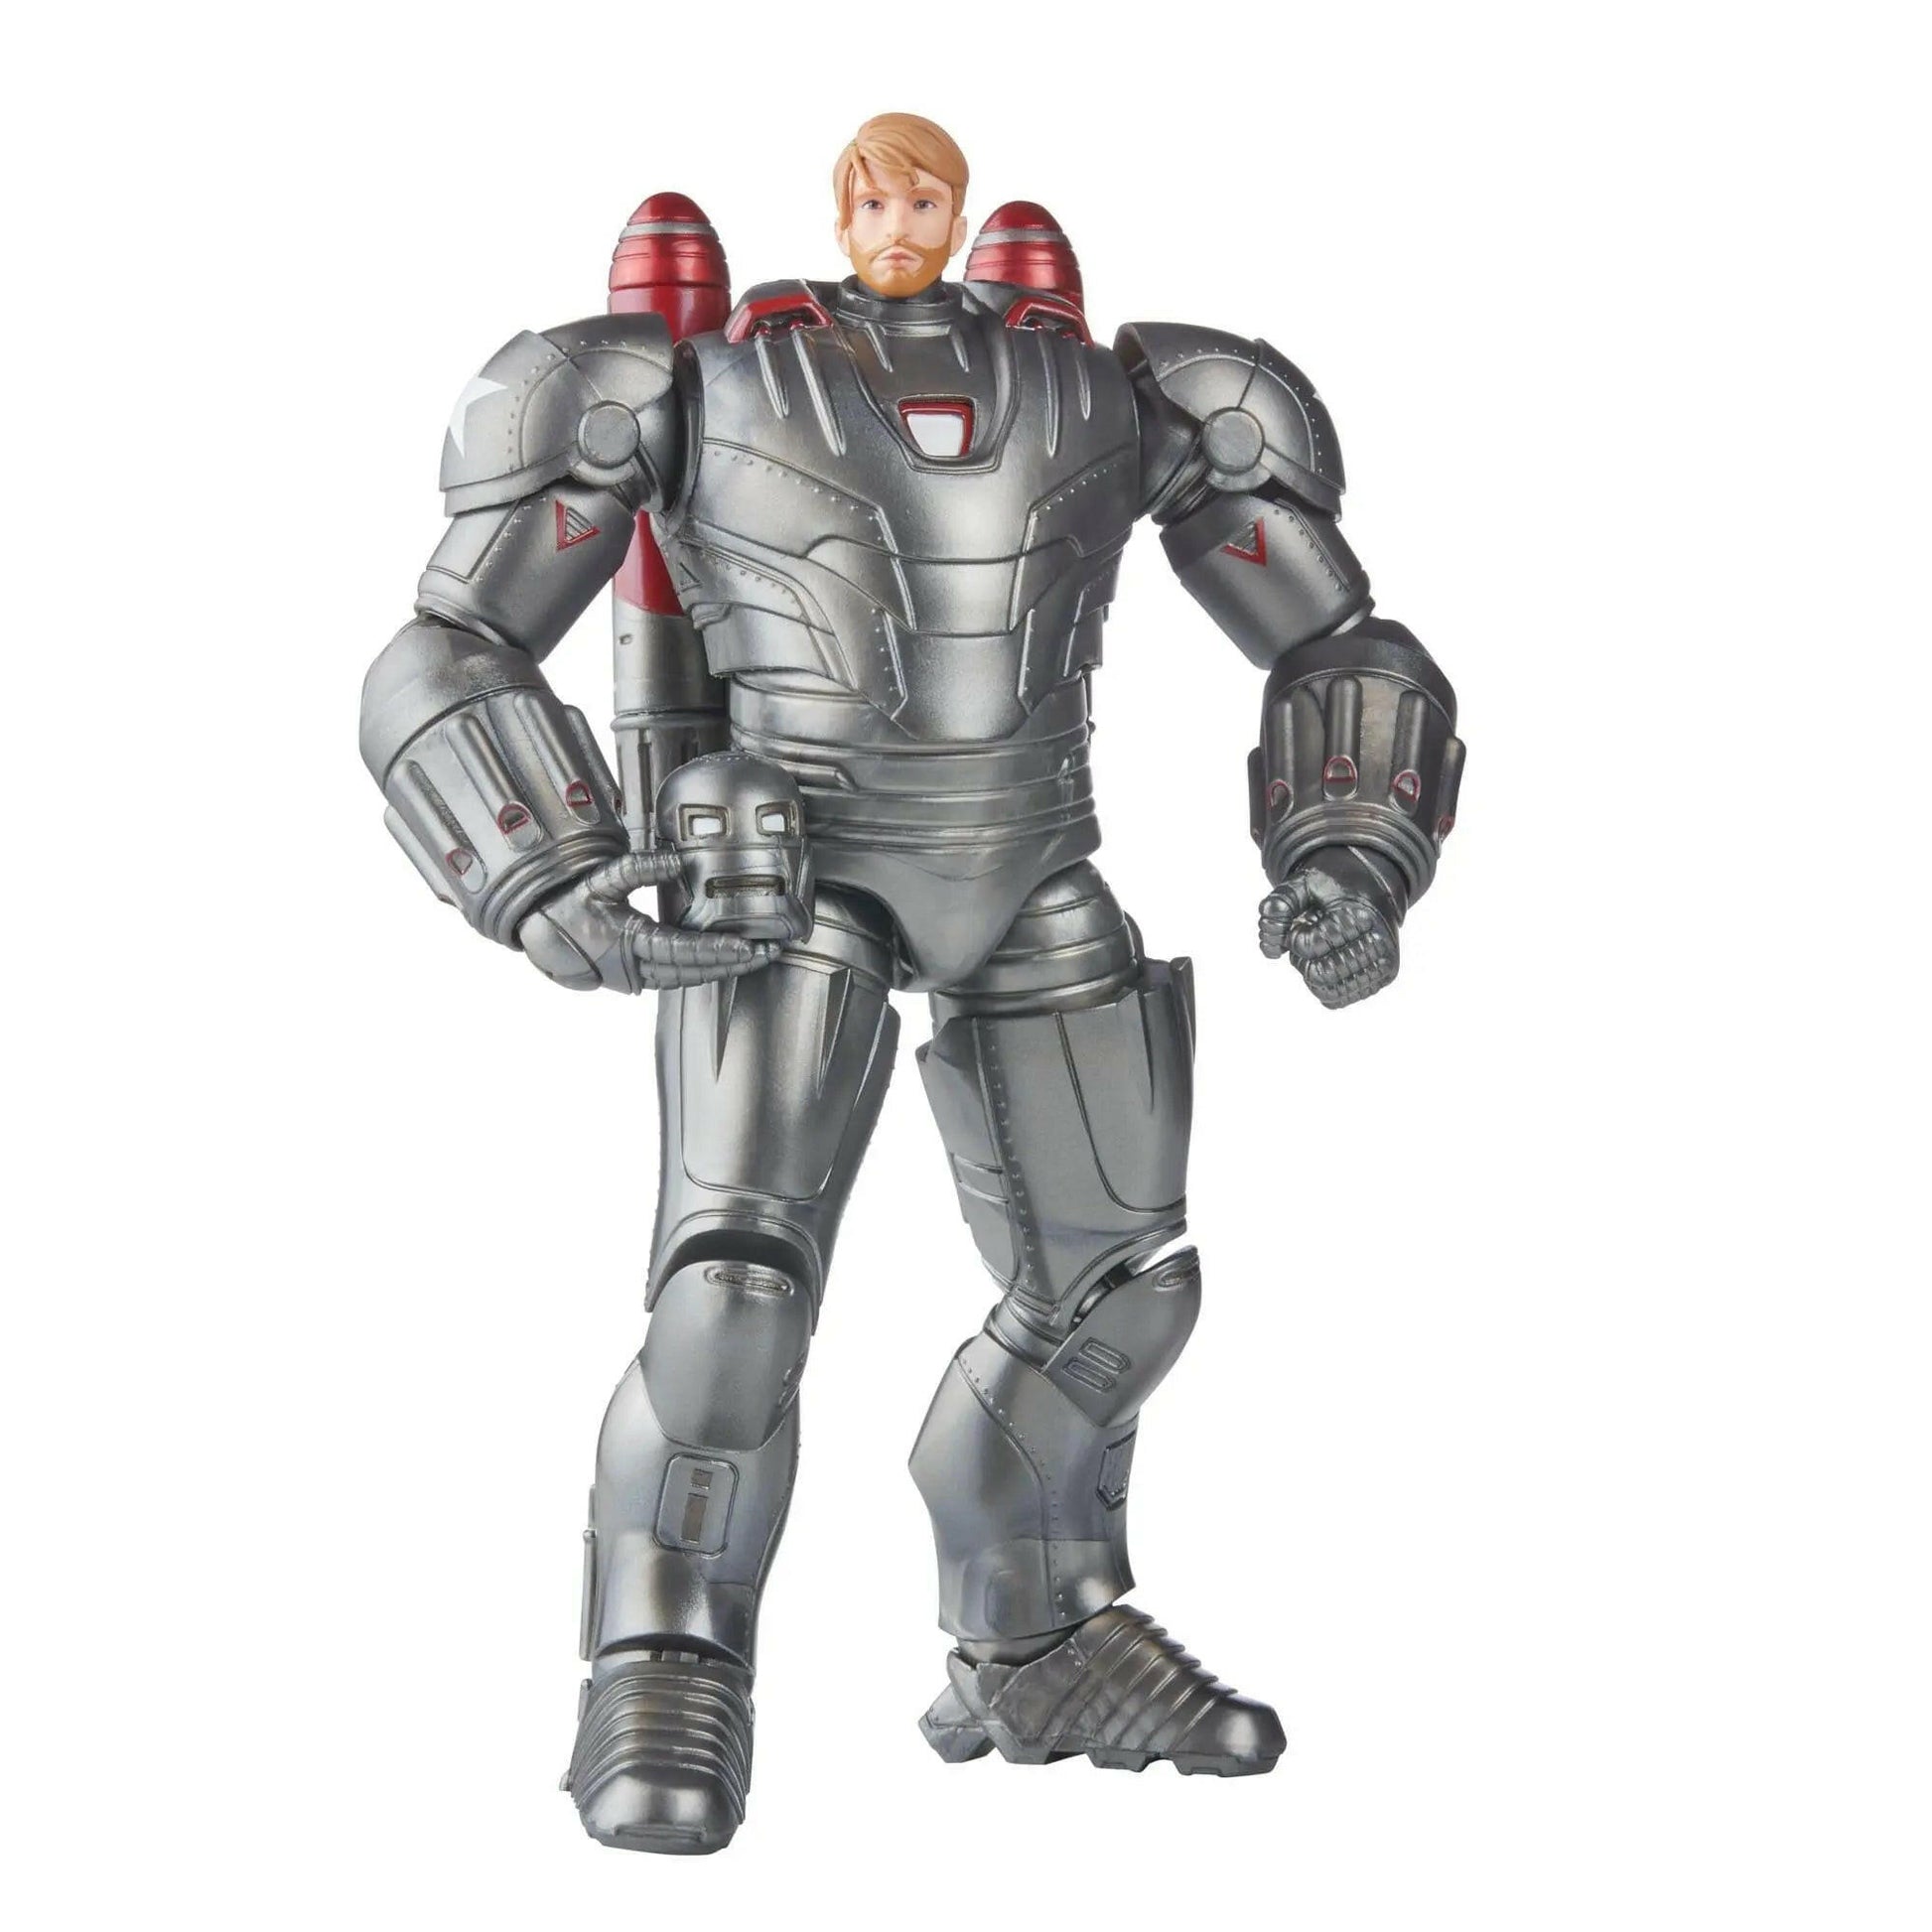 Marvel Legends WandaVision Actionfigur Agatha Harkness (BAF: Hydra Stomper) 15cm - Toy-Storage